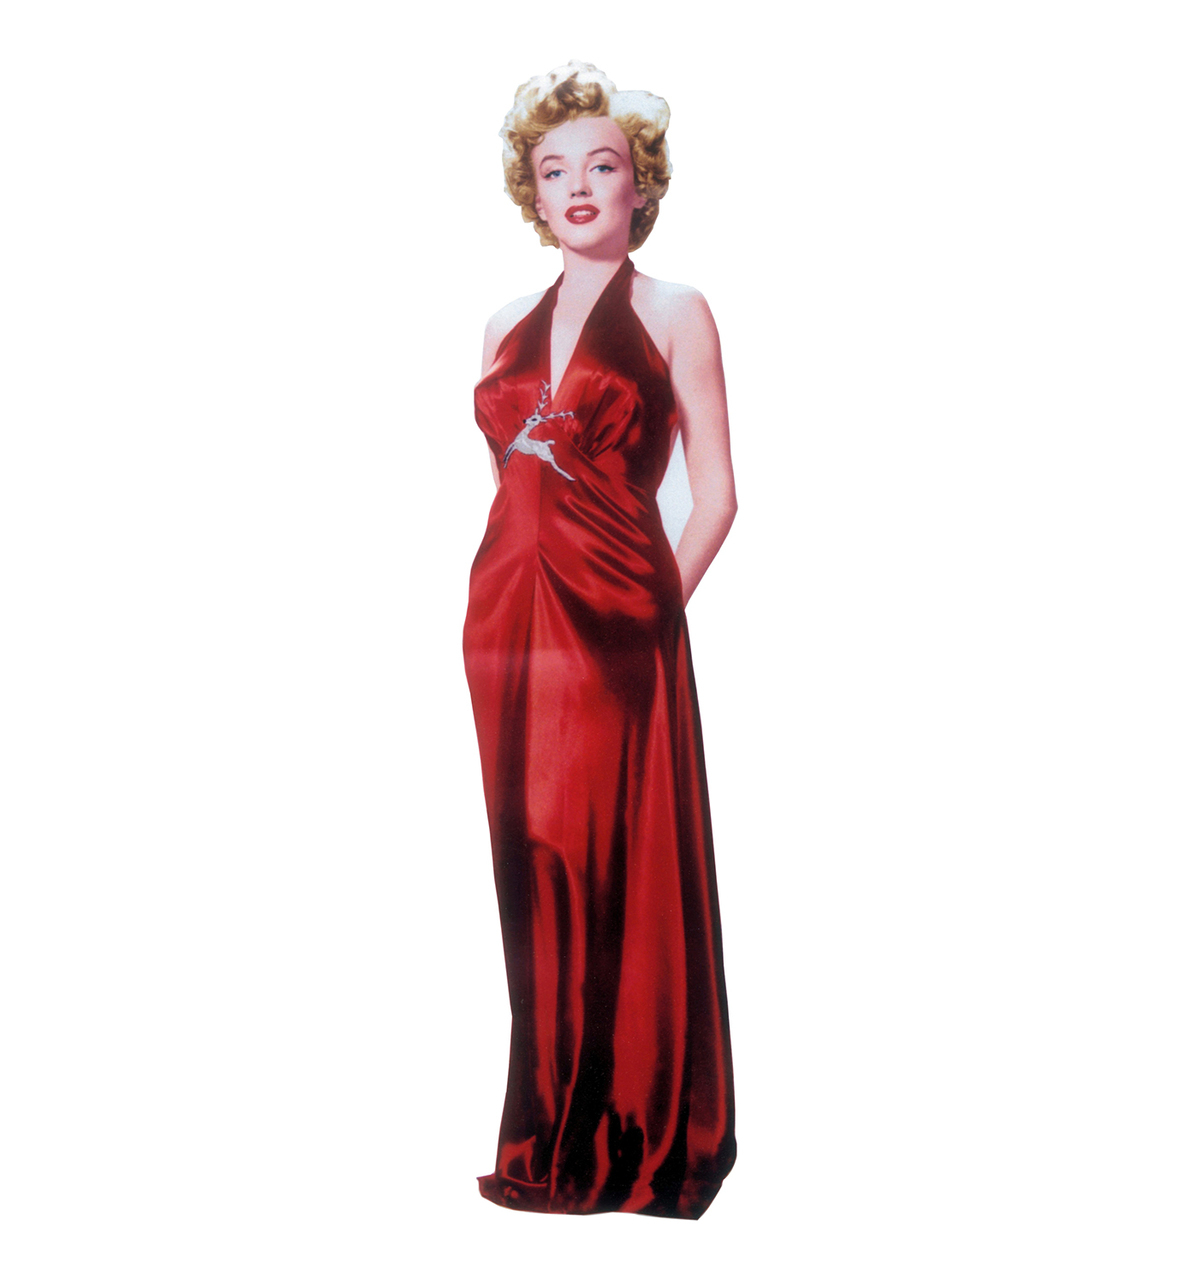 SU-316 Marilyn Monroe Red Gown Lifesize Cutout Standup - SWIT Sports